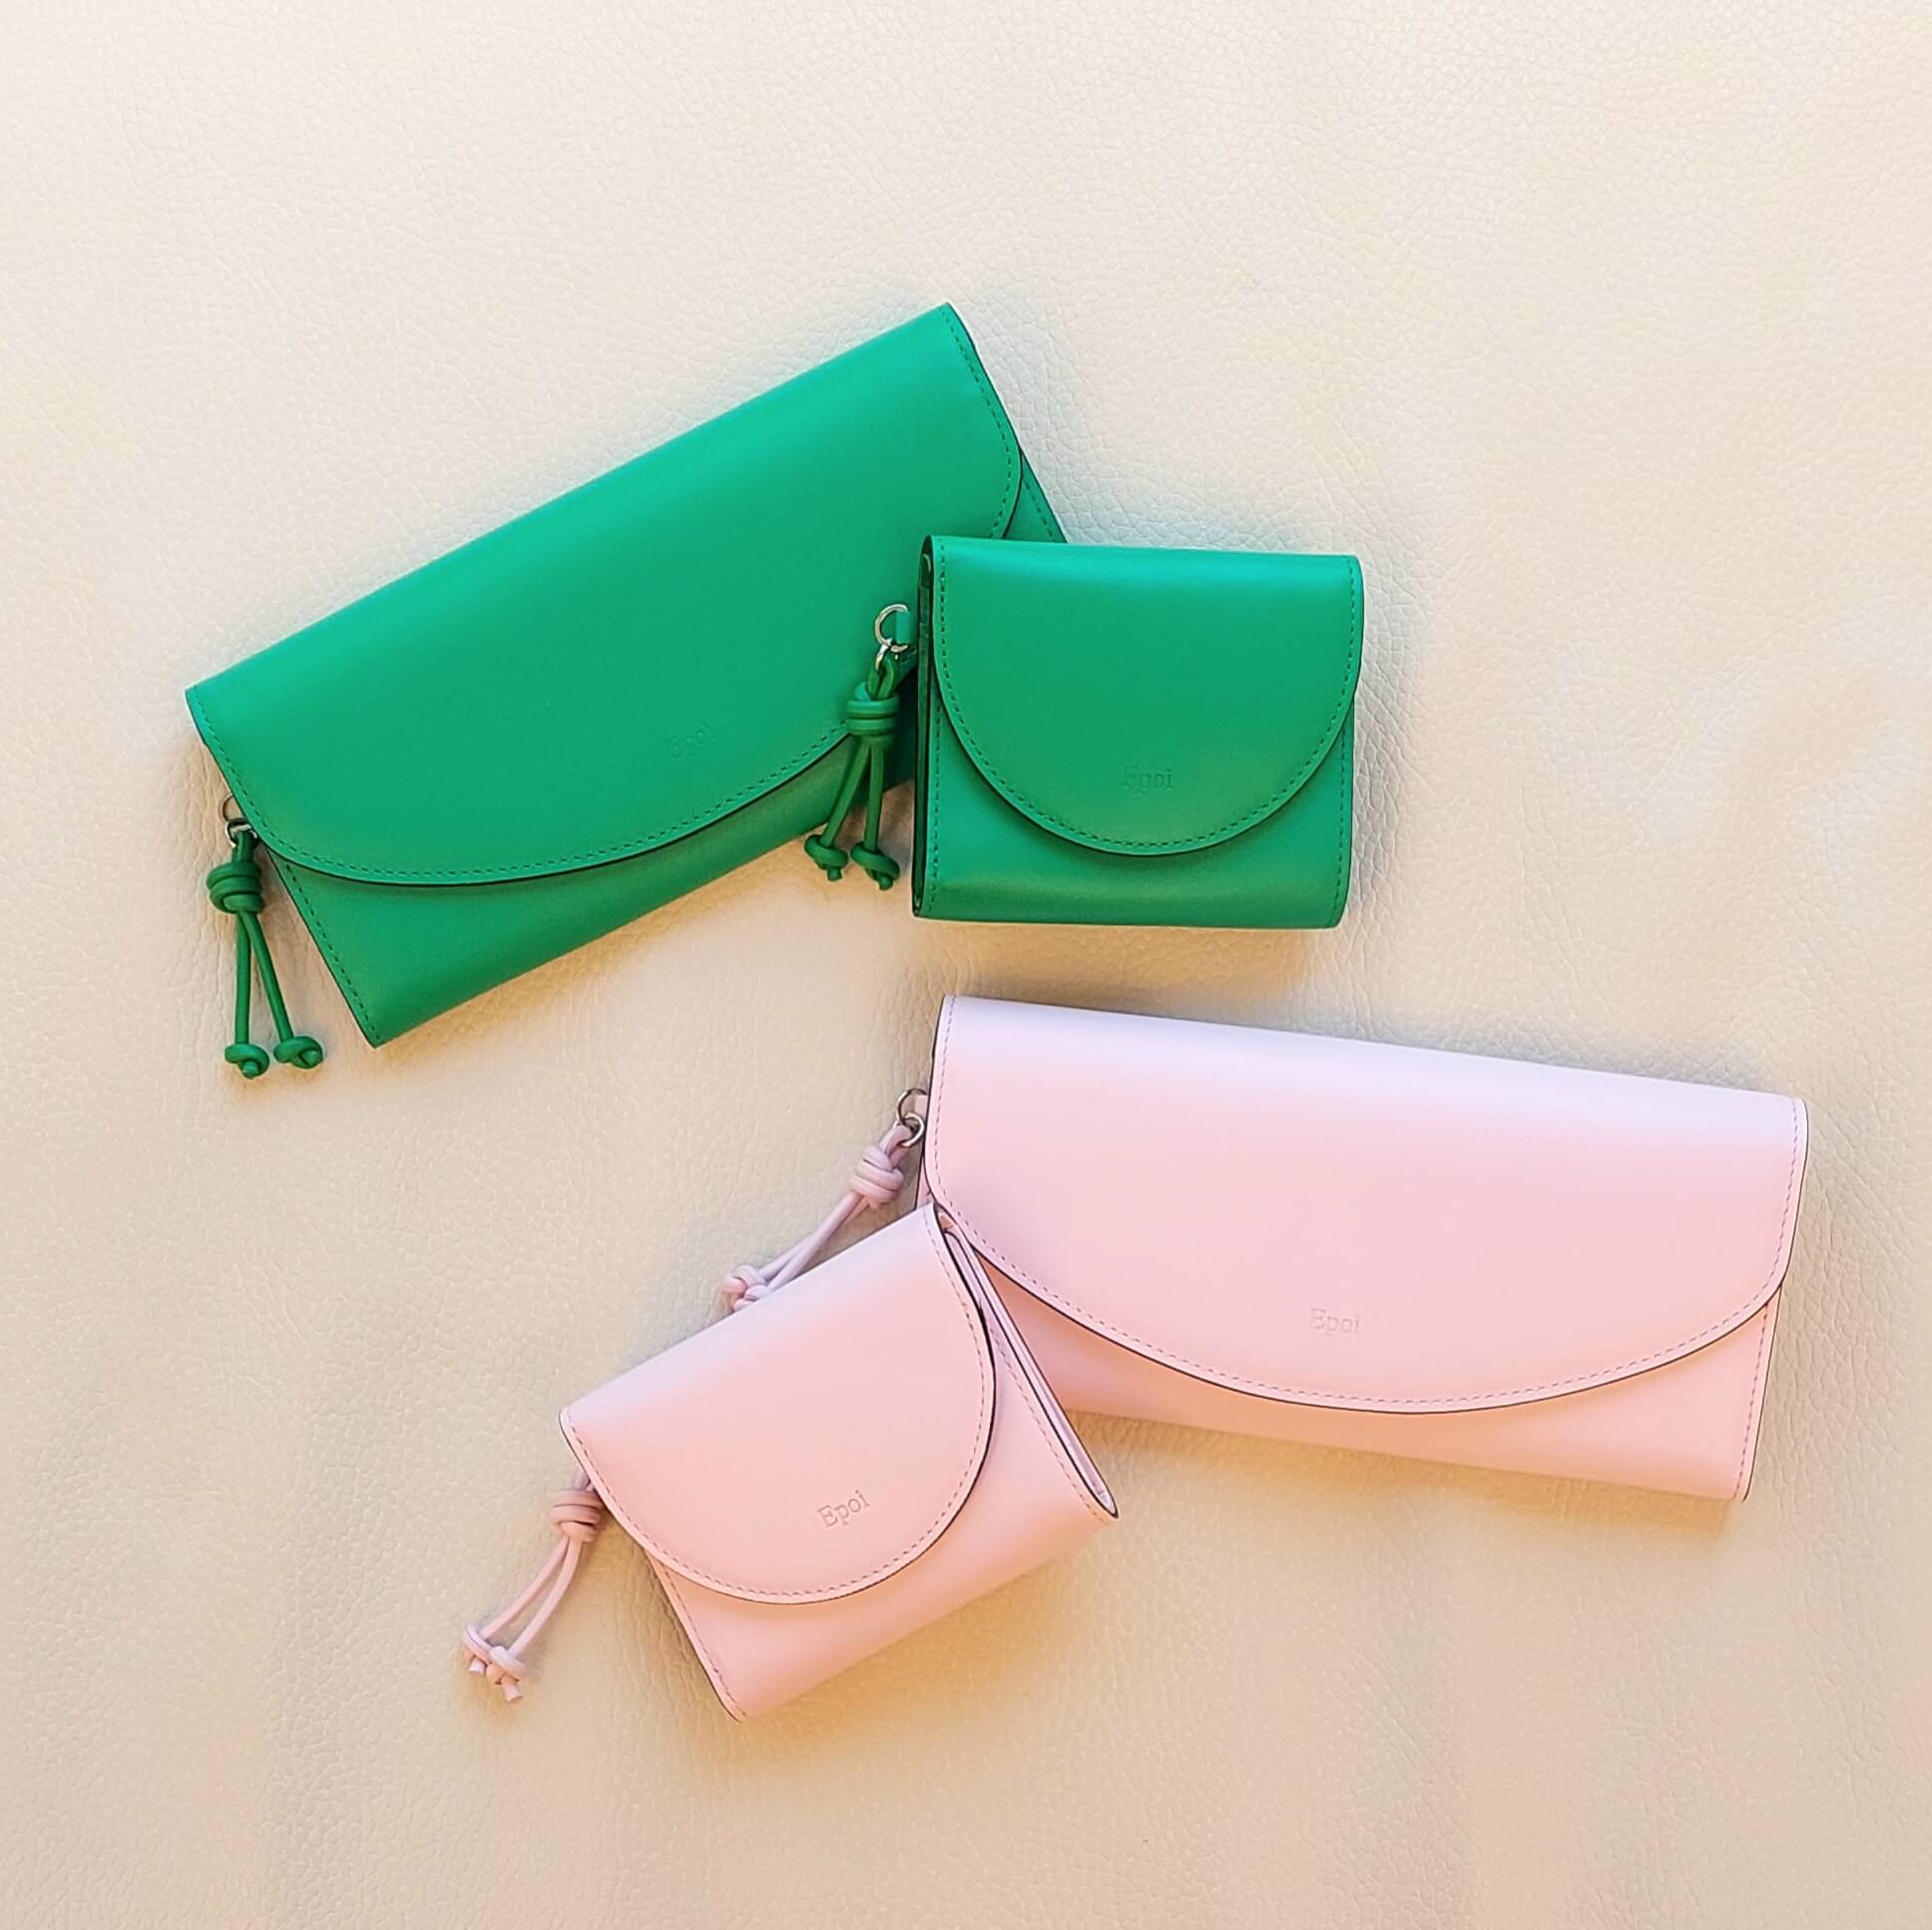 【New colors】お財布とカードケースに、新色ピンク&グリーンが登場！🌷